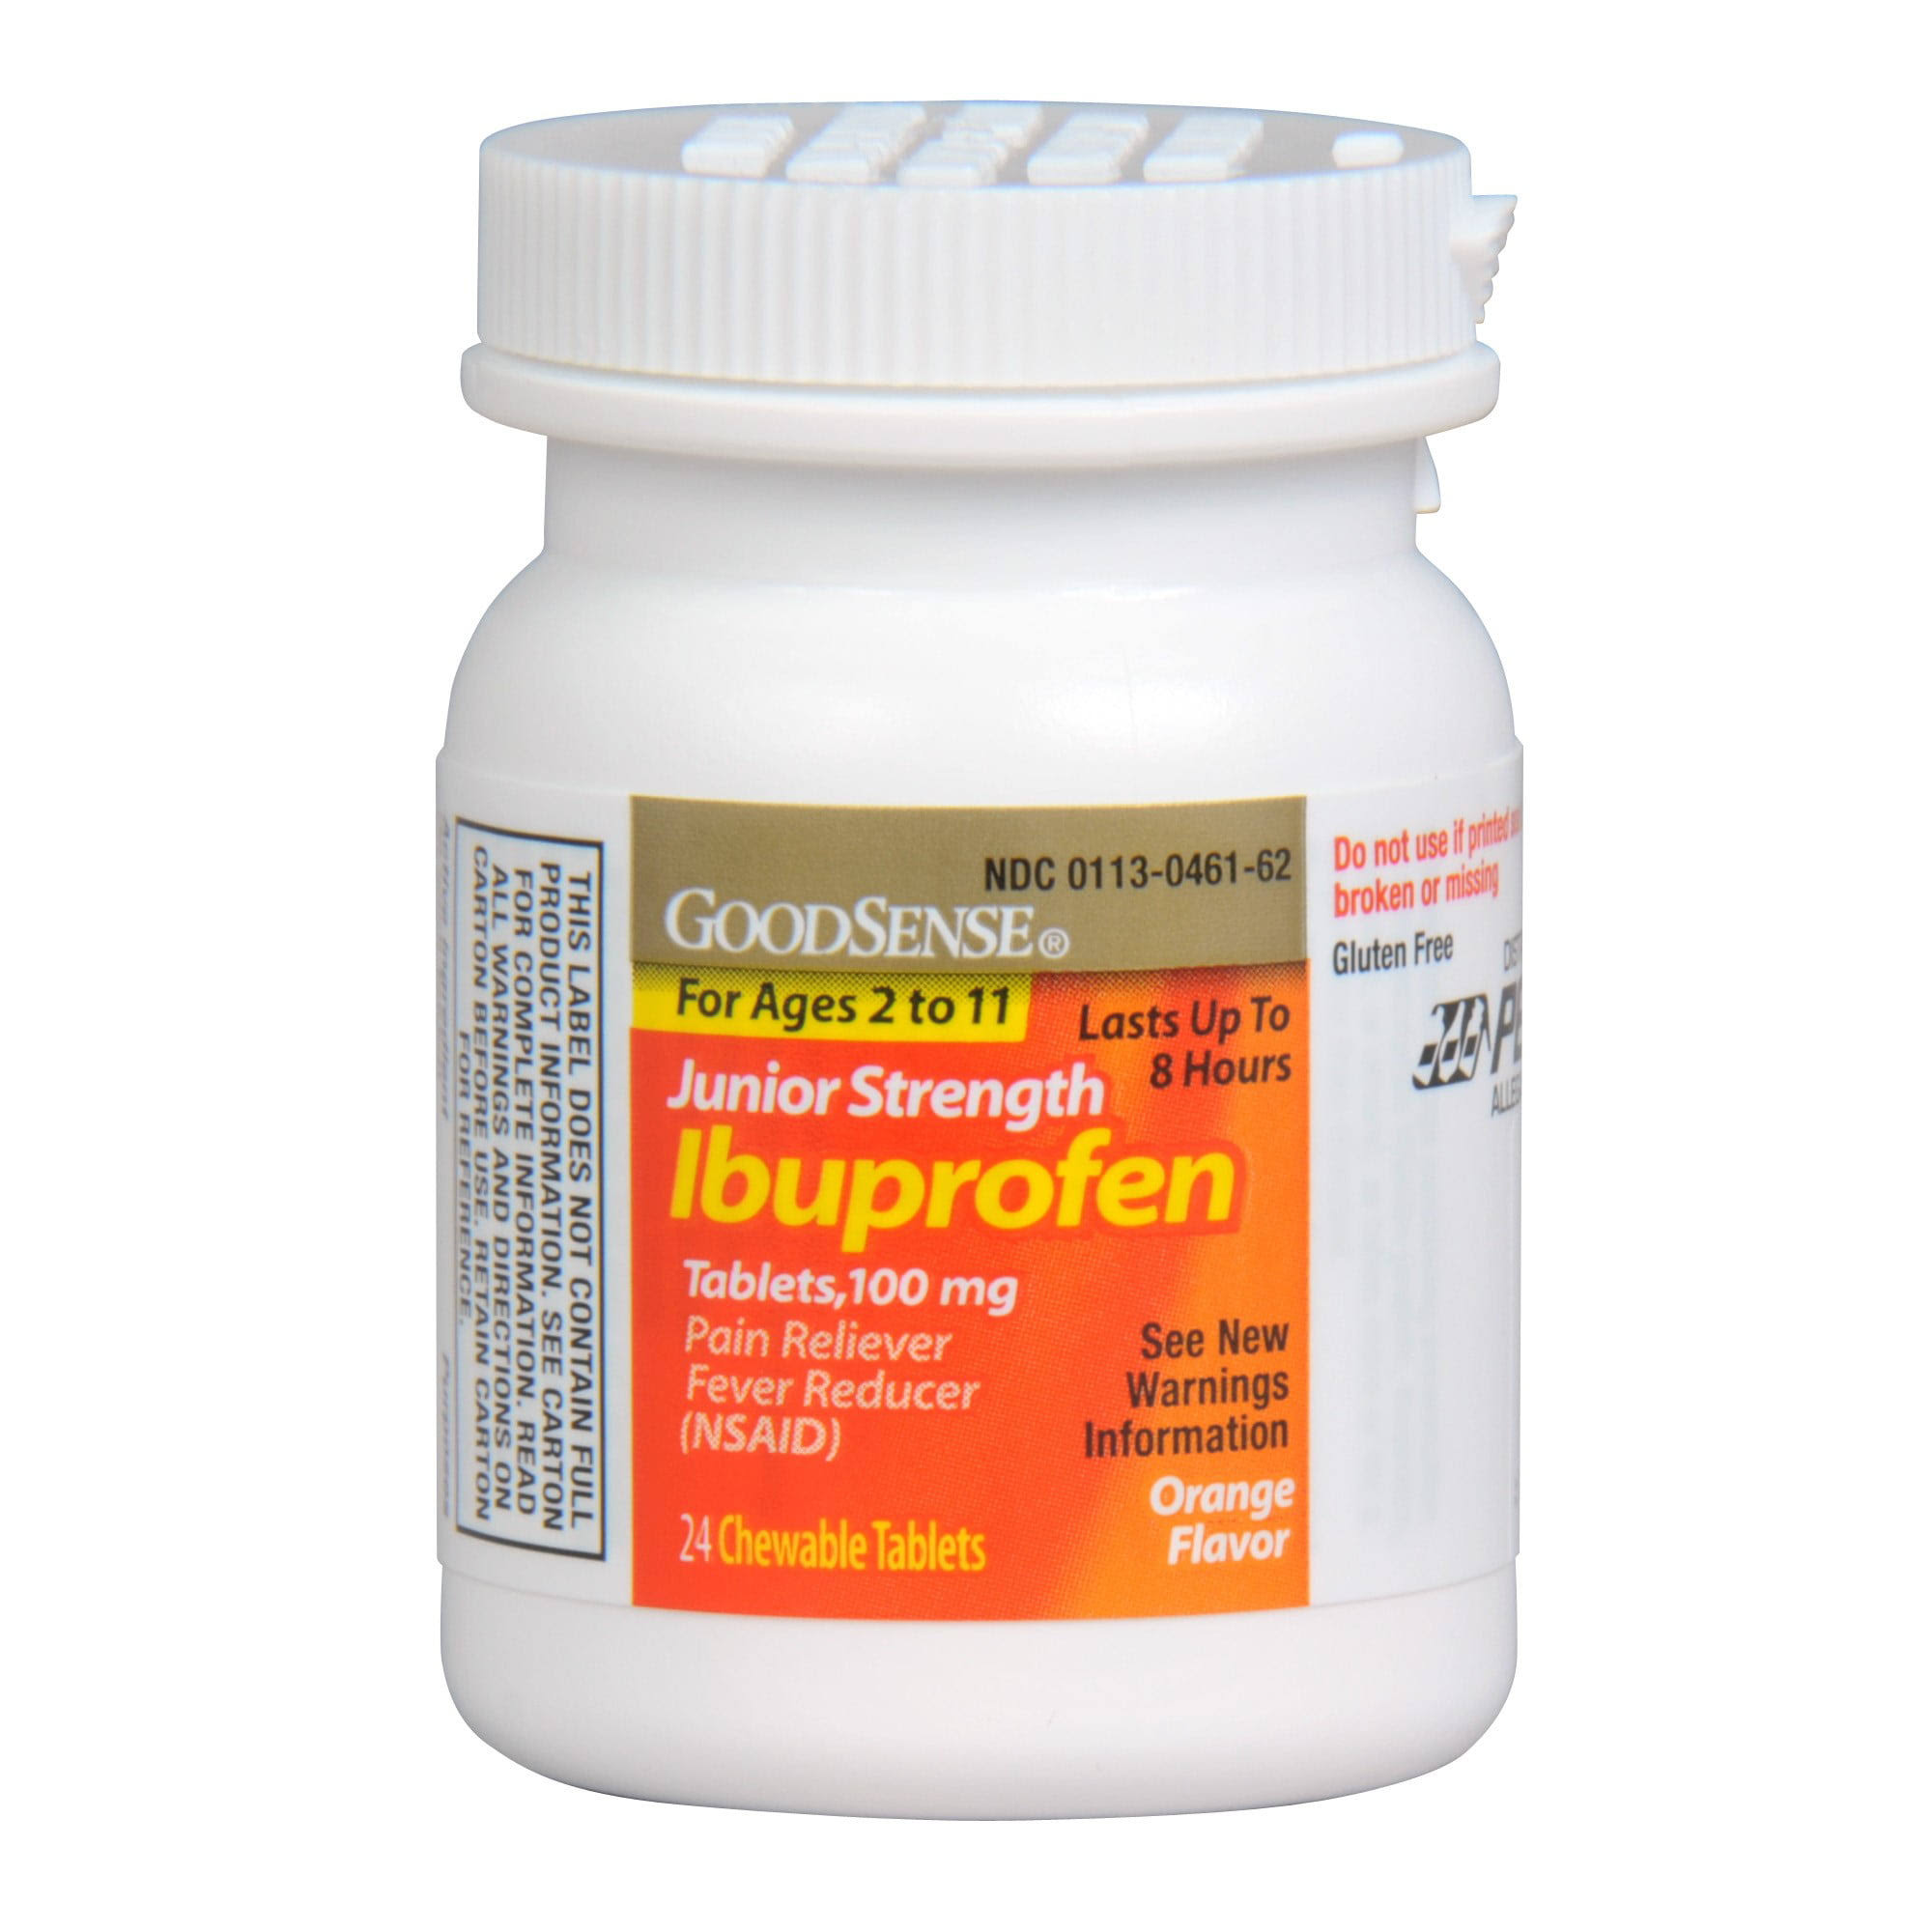 GoodSense Junior Strength Ibuprofen Pain Reliever - 24 Count